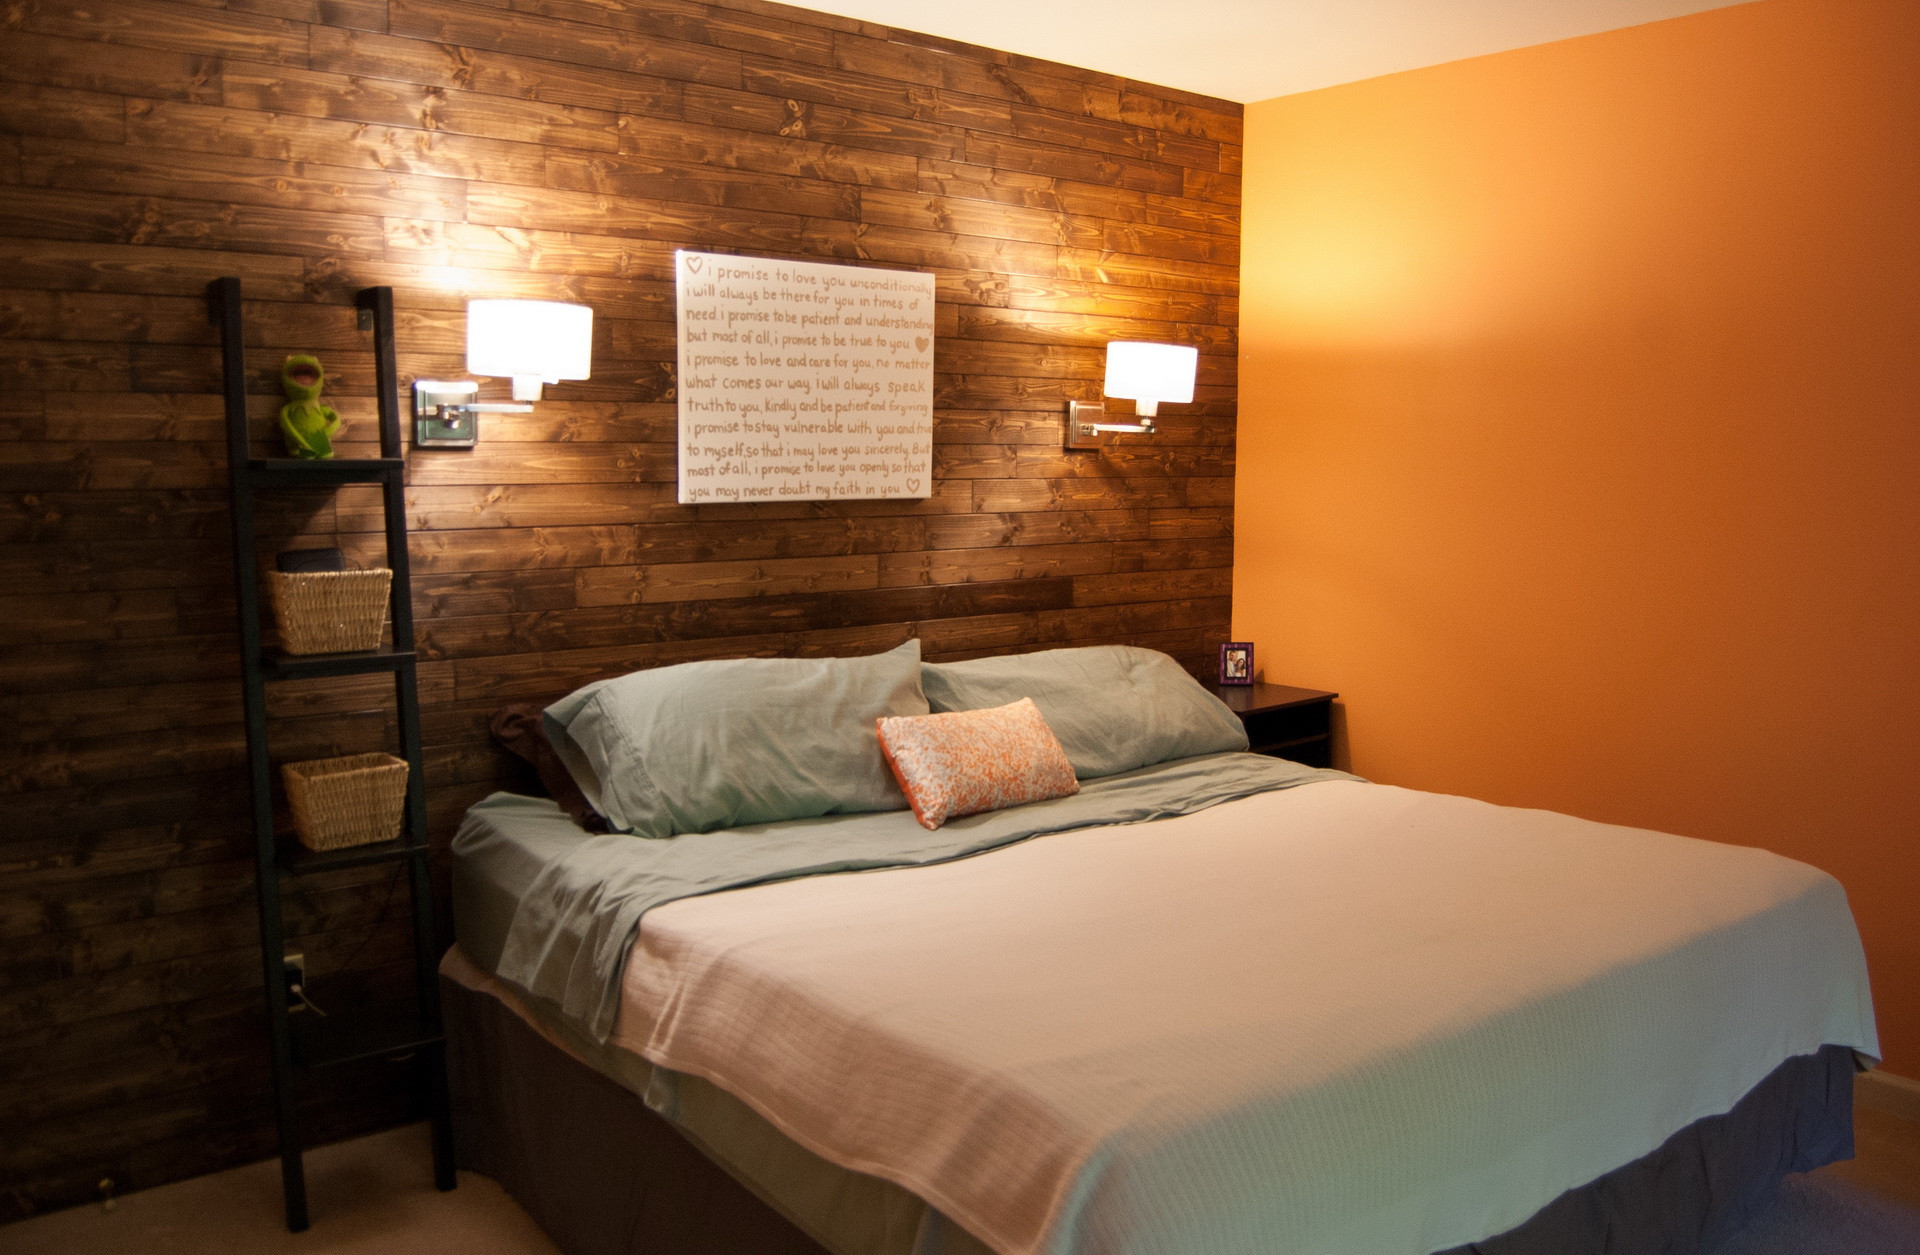 Bedroom Wall Light
 Bedside wall lights Enhance Your Bedroom Decor